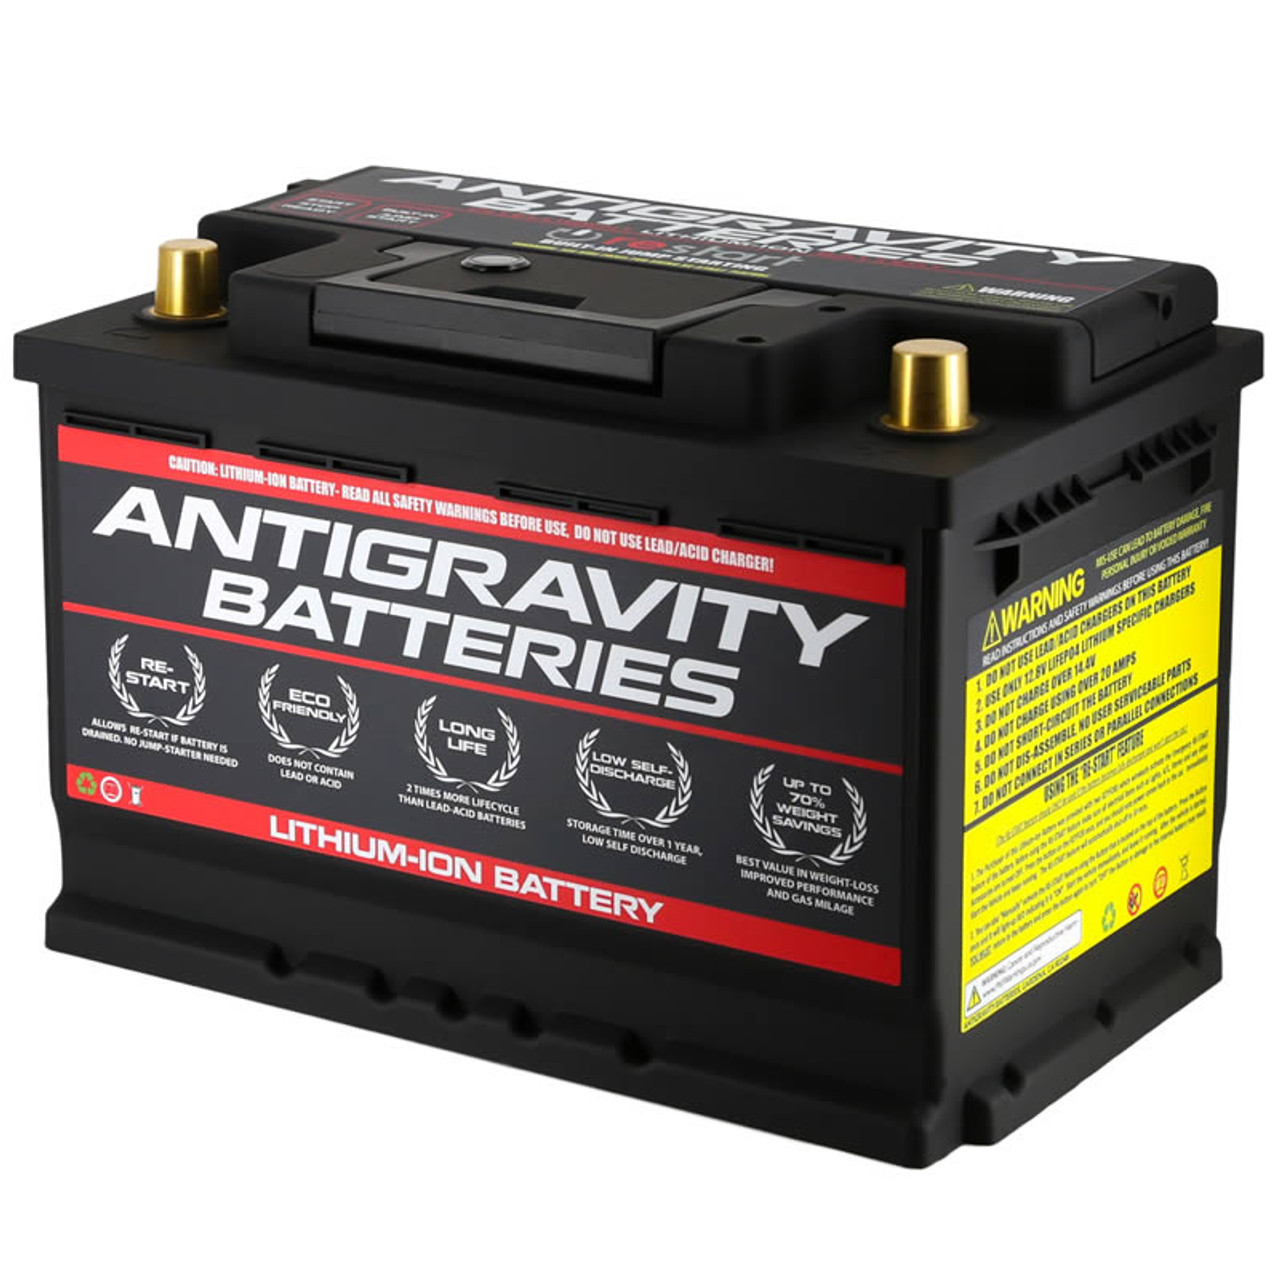 4-CELL ALUMINUM BATTERY TRAY – Antigravity Batteries